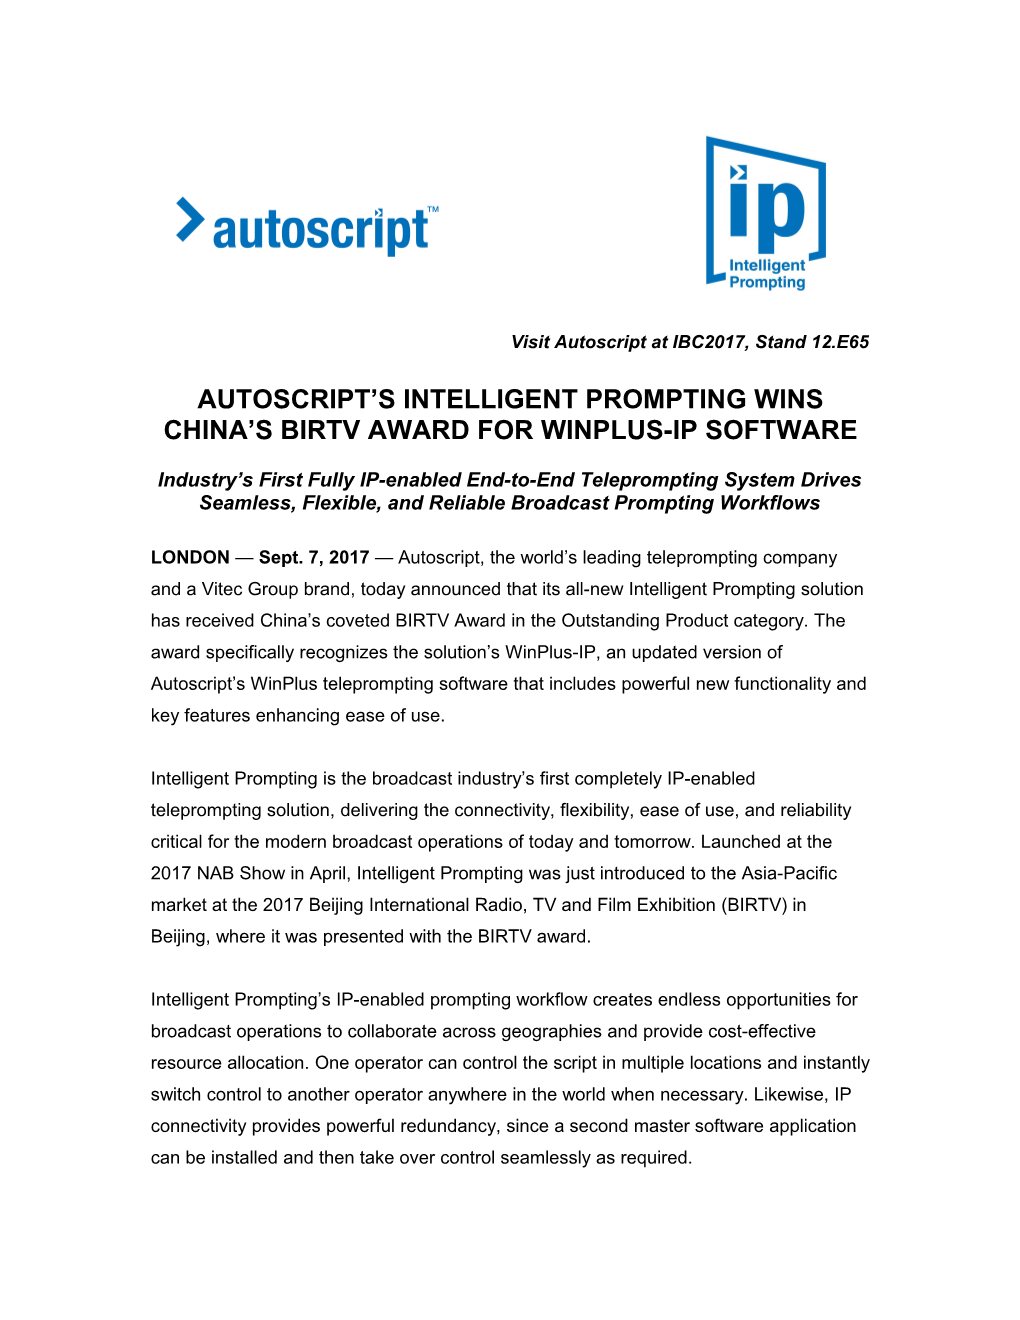 Autoscript S Intelligent Prompting Wins CHINA S BIRTV Award for Winplus-IP SOFTWARE